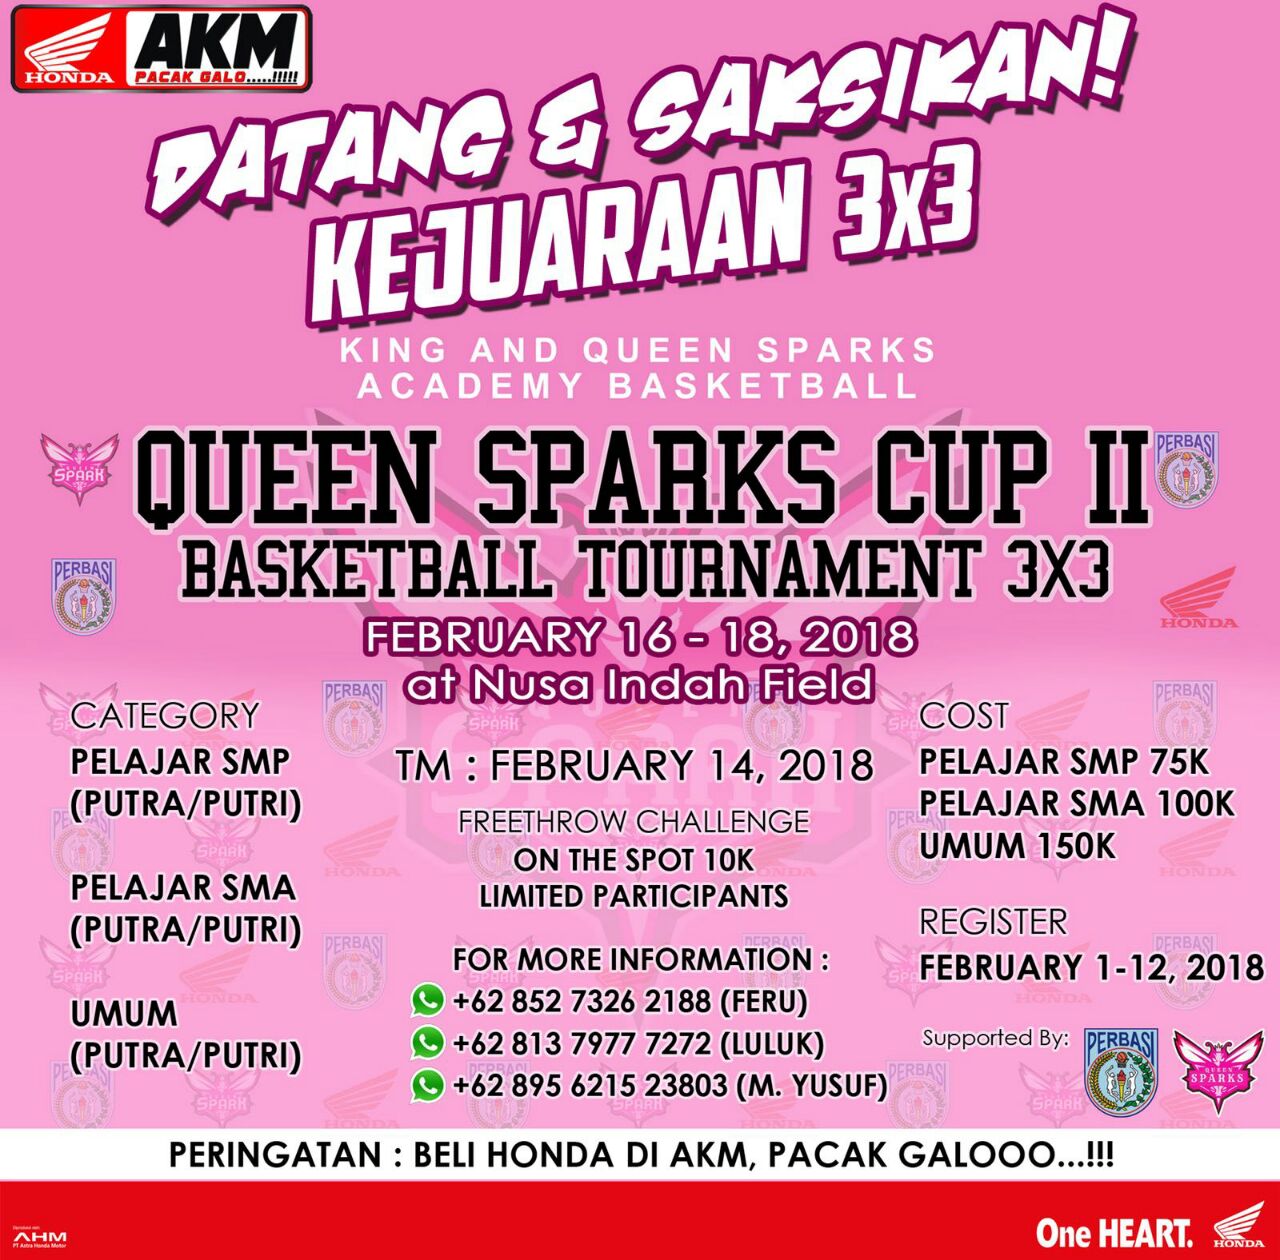 Datang dan Saksikan Turnamen Basketball 3×3 Queen Sparks Cup II